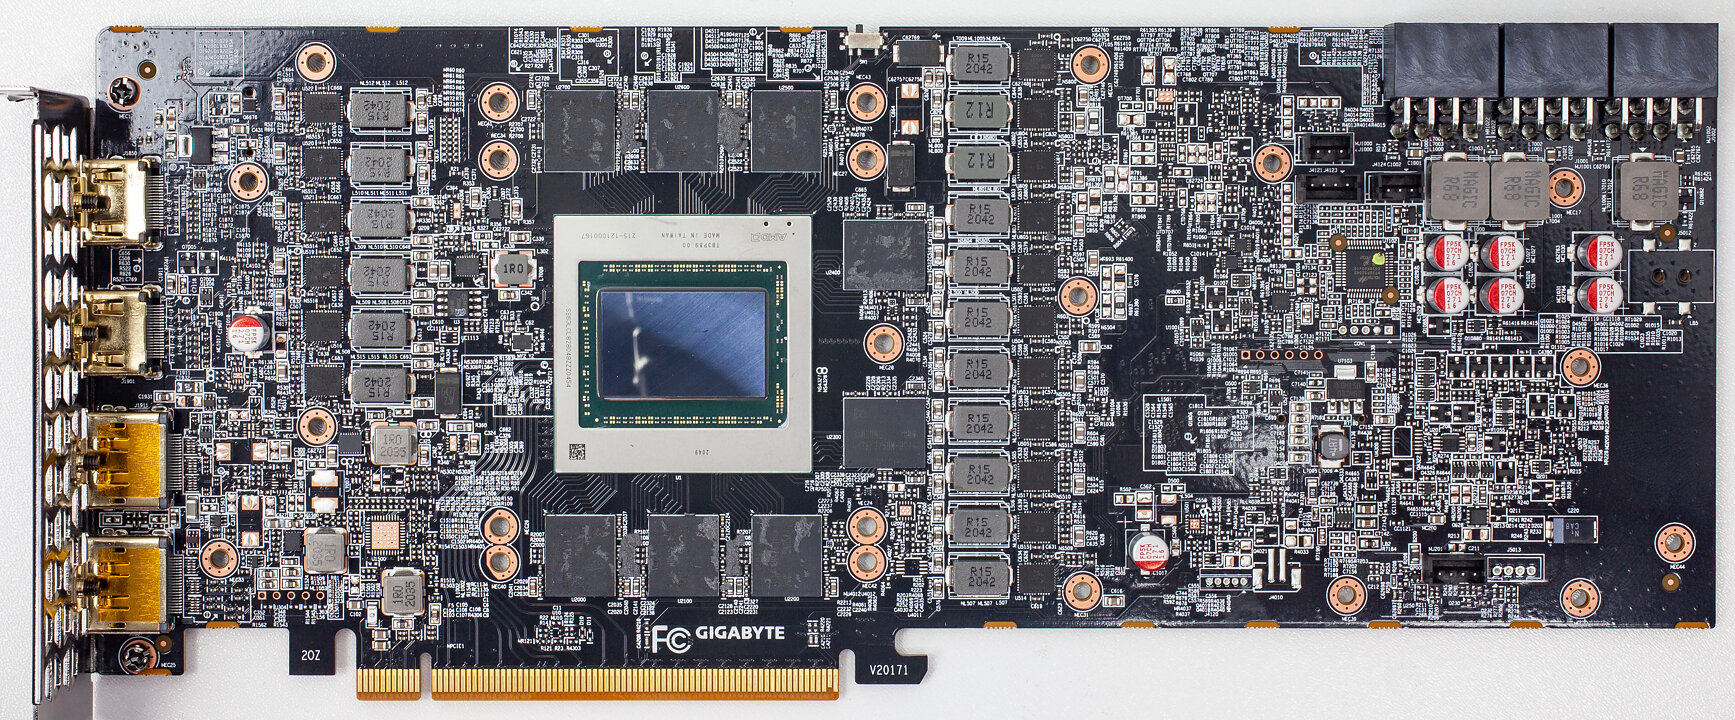 Gigabyte Radeon RX 6900 XT Gaming OC Review - Circuit Board Analysis